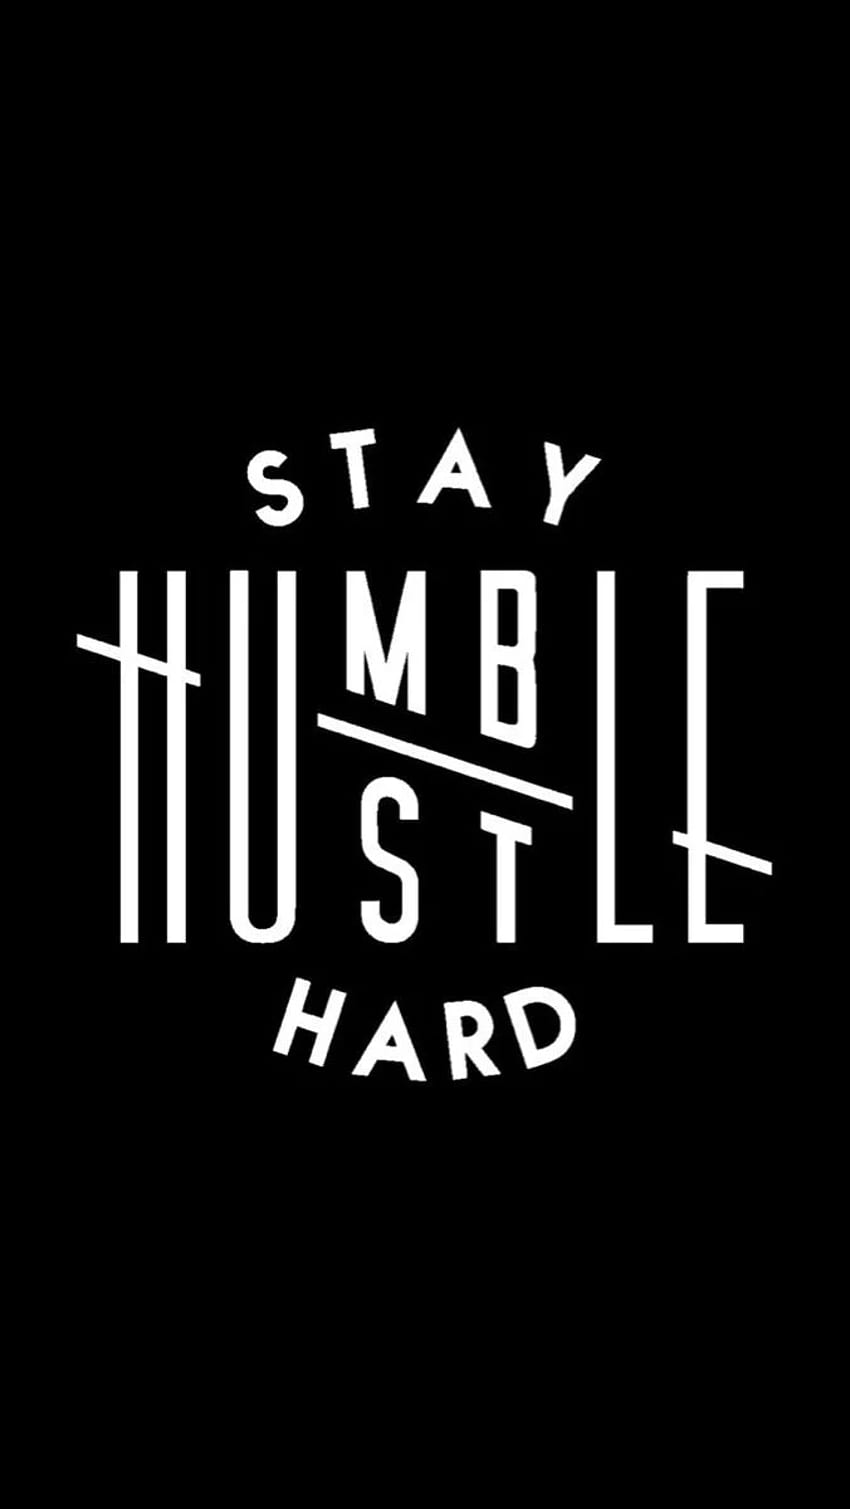 Help Building Young Entrepreneurs. Humble quotes, Stay humble quotes, Hustle quotes, Stay Humble Hustle Hard HD phone wallpaper